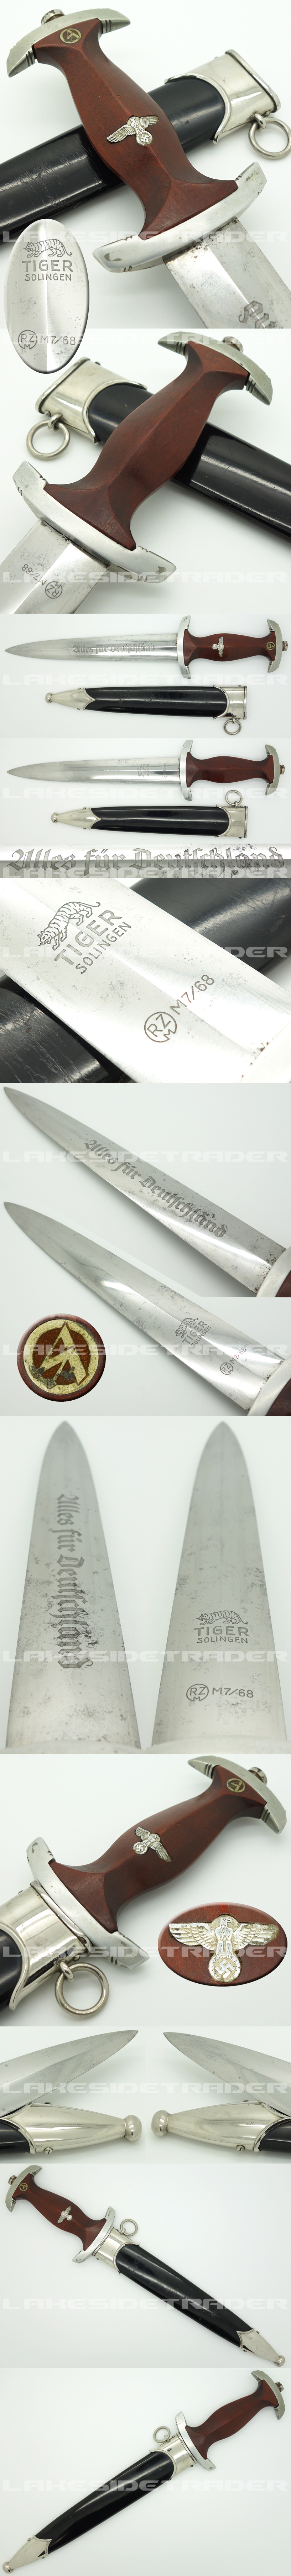 Rare Transitional NSKK Dagger by Tiger (RZM M7/68)